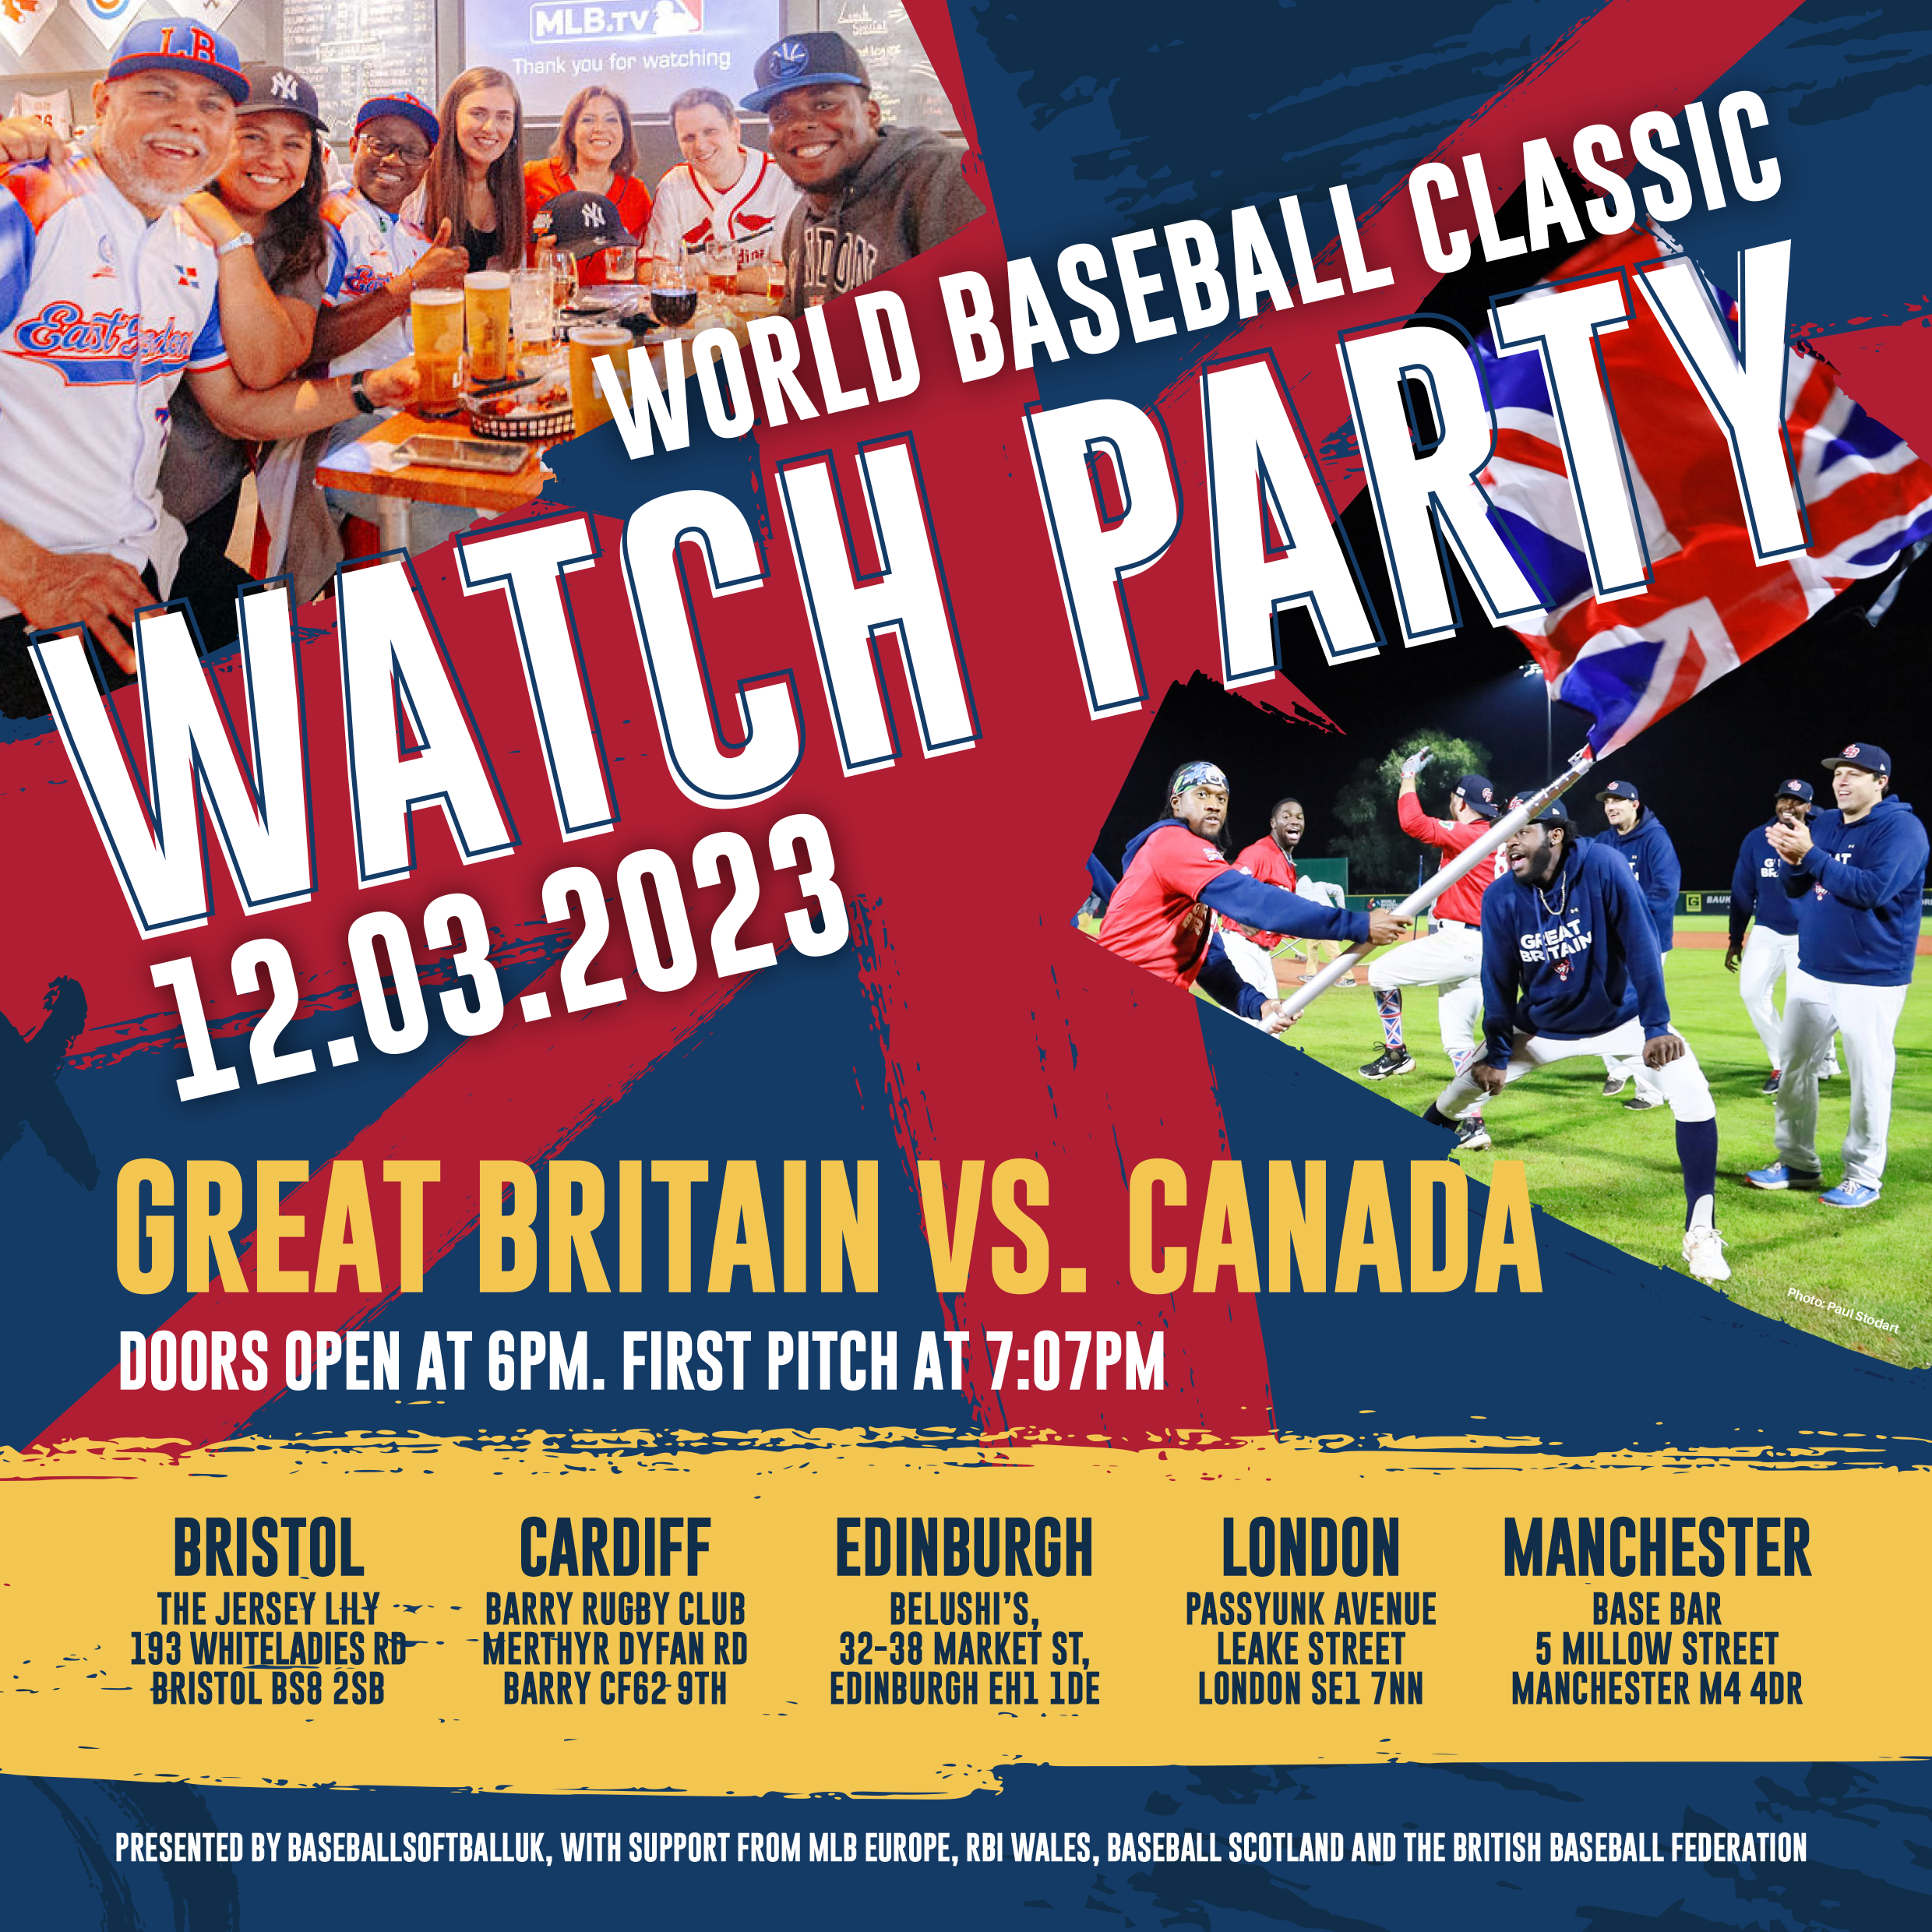 Join us for a World Baseball Classic Watch Party across Great Britain on 12 March! BaseballSoftballUK